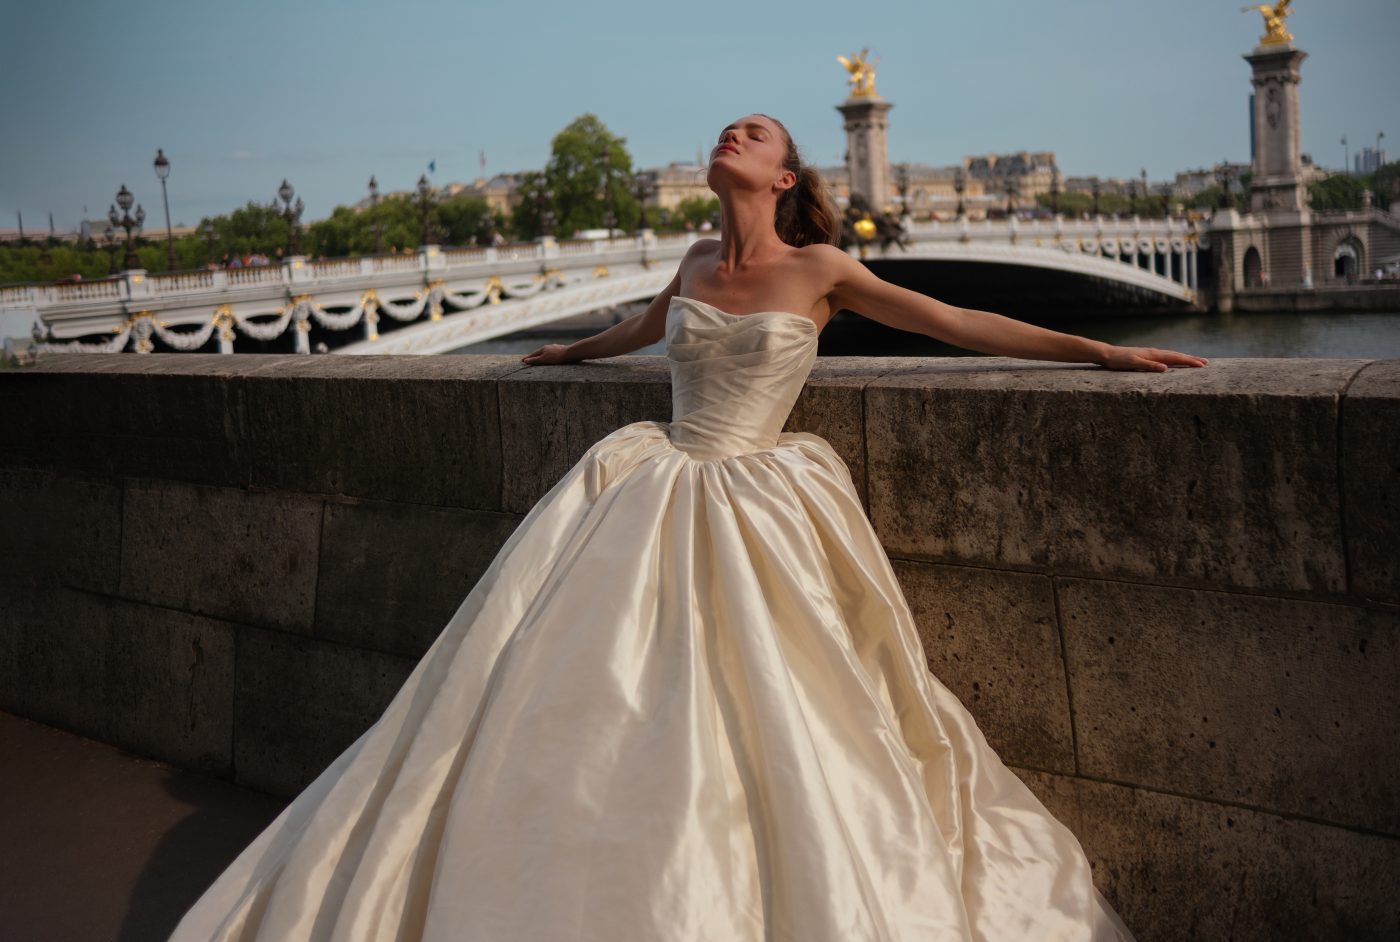 Elegant & Sophisticated Wedding Dresses - Kleinfeld